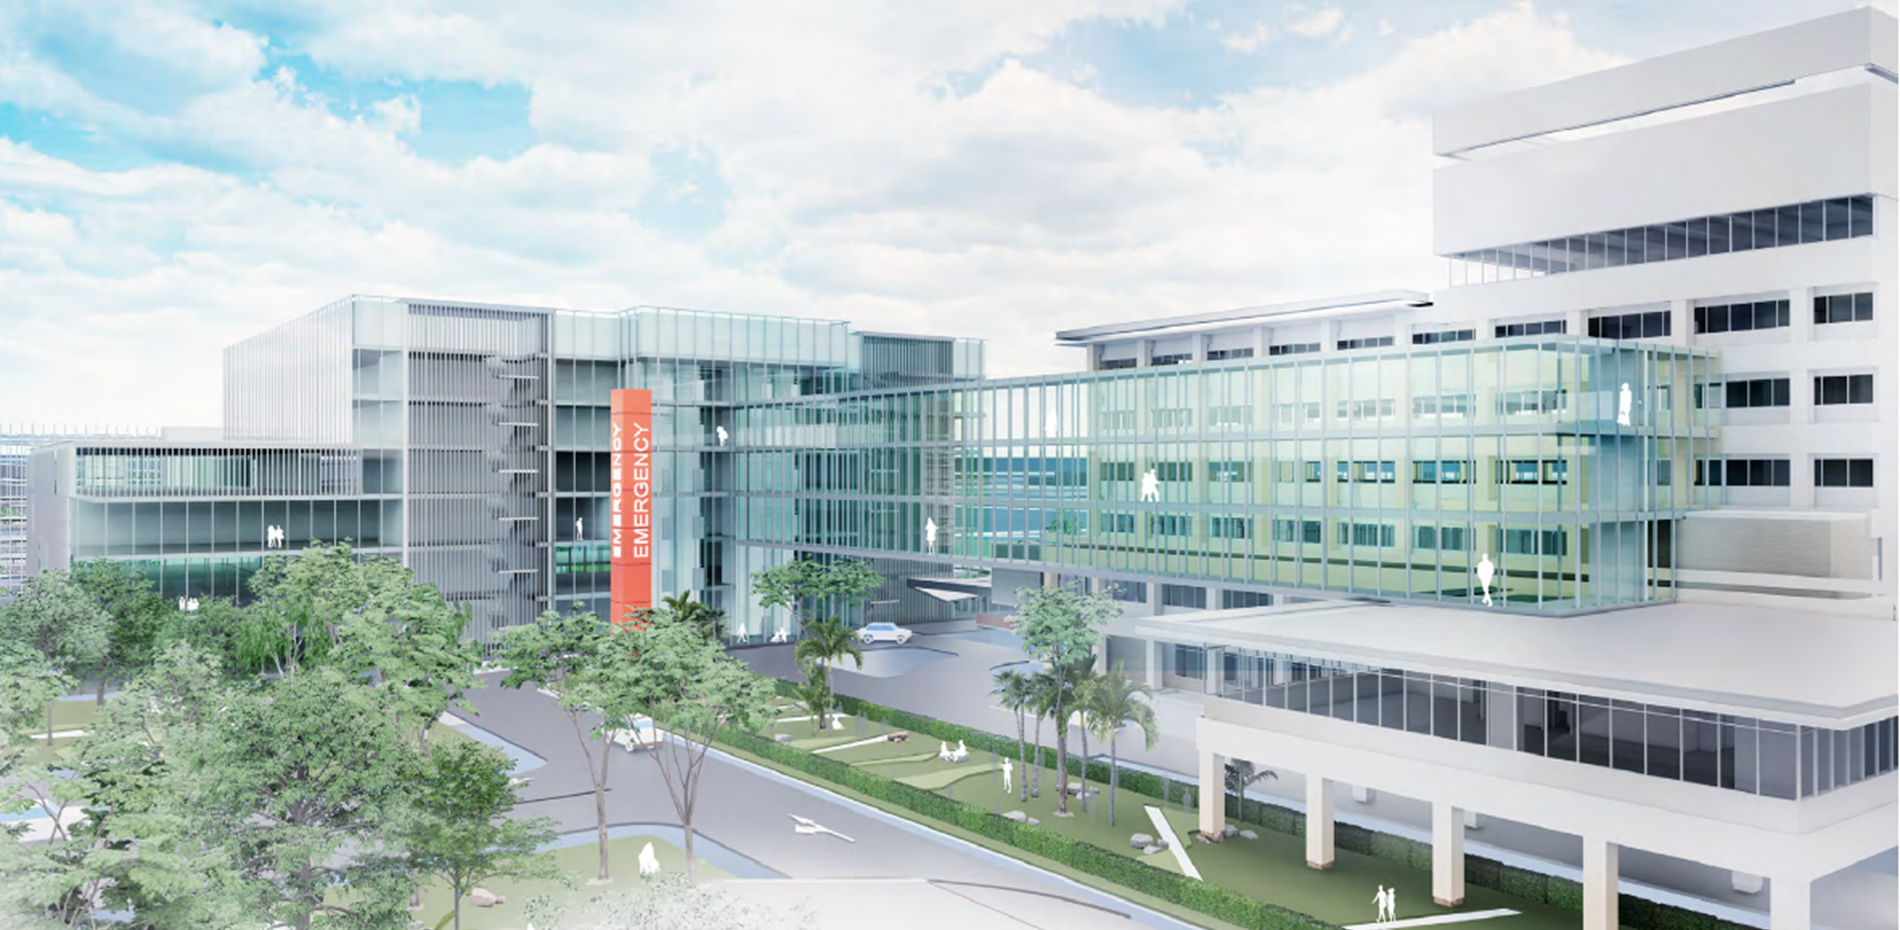 Redcliffe Hospital’s $1 Billion Expansion! Main Image